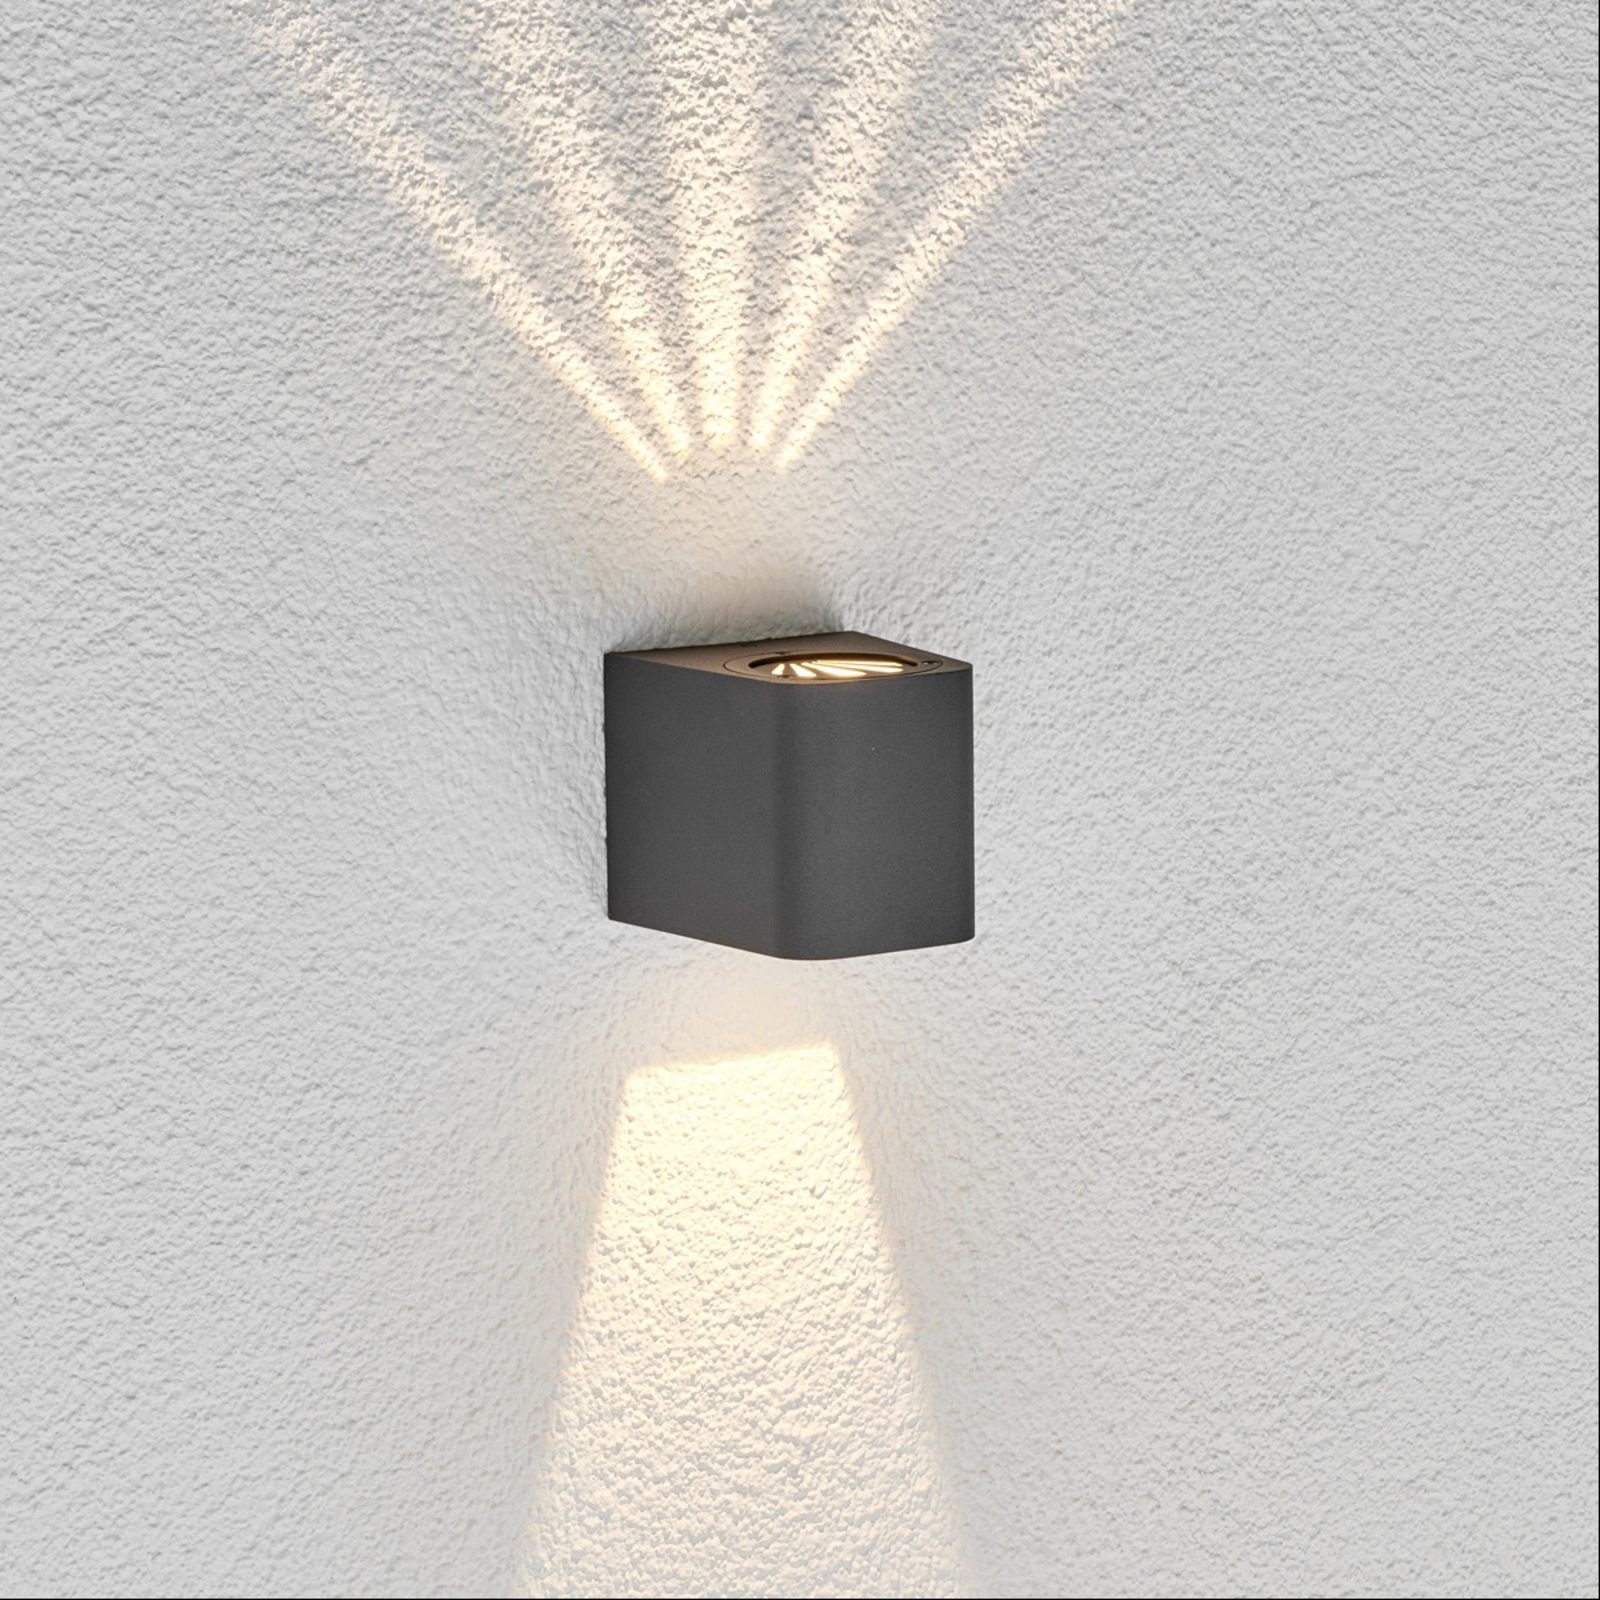 LED outdoor wall light Karsten